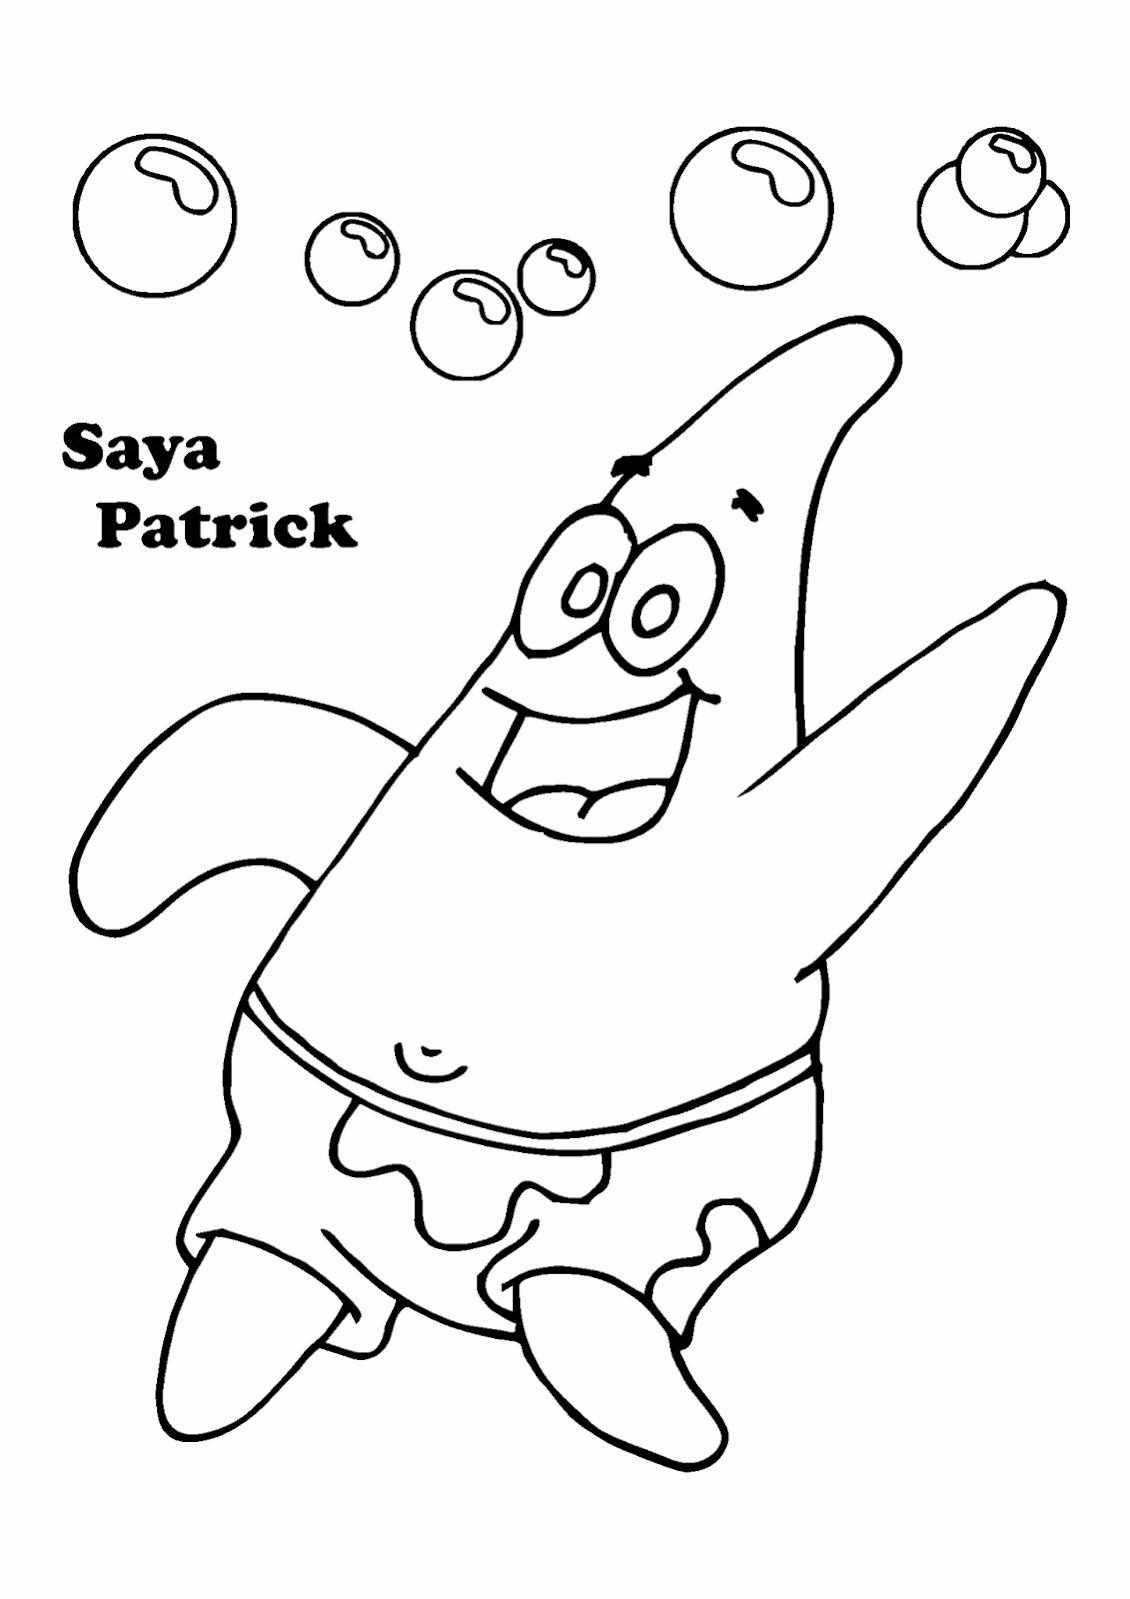 Mewarnai Gambar Patrick SpongeBob SquarePants Contoh Anak PAUD